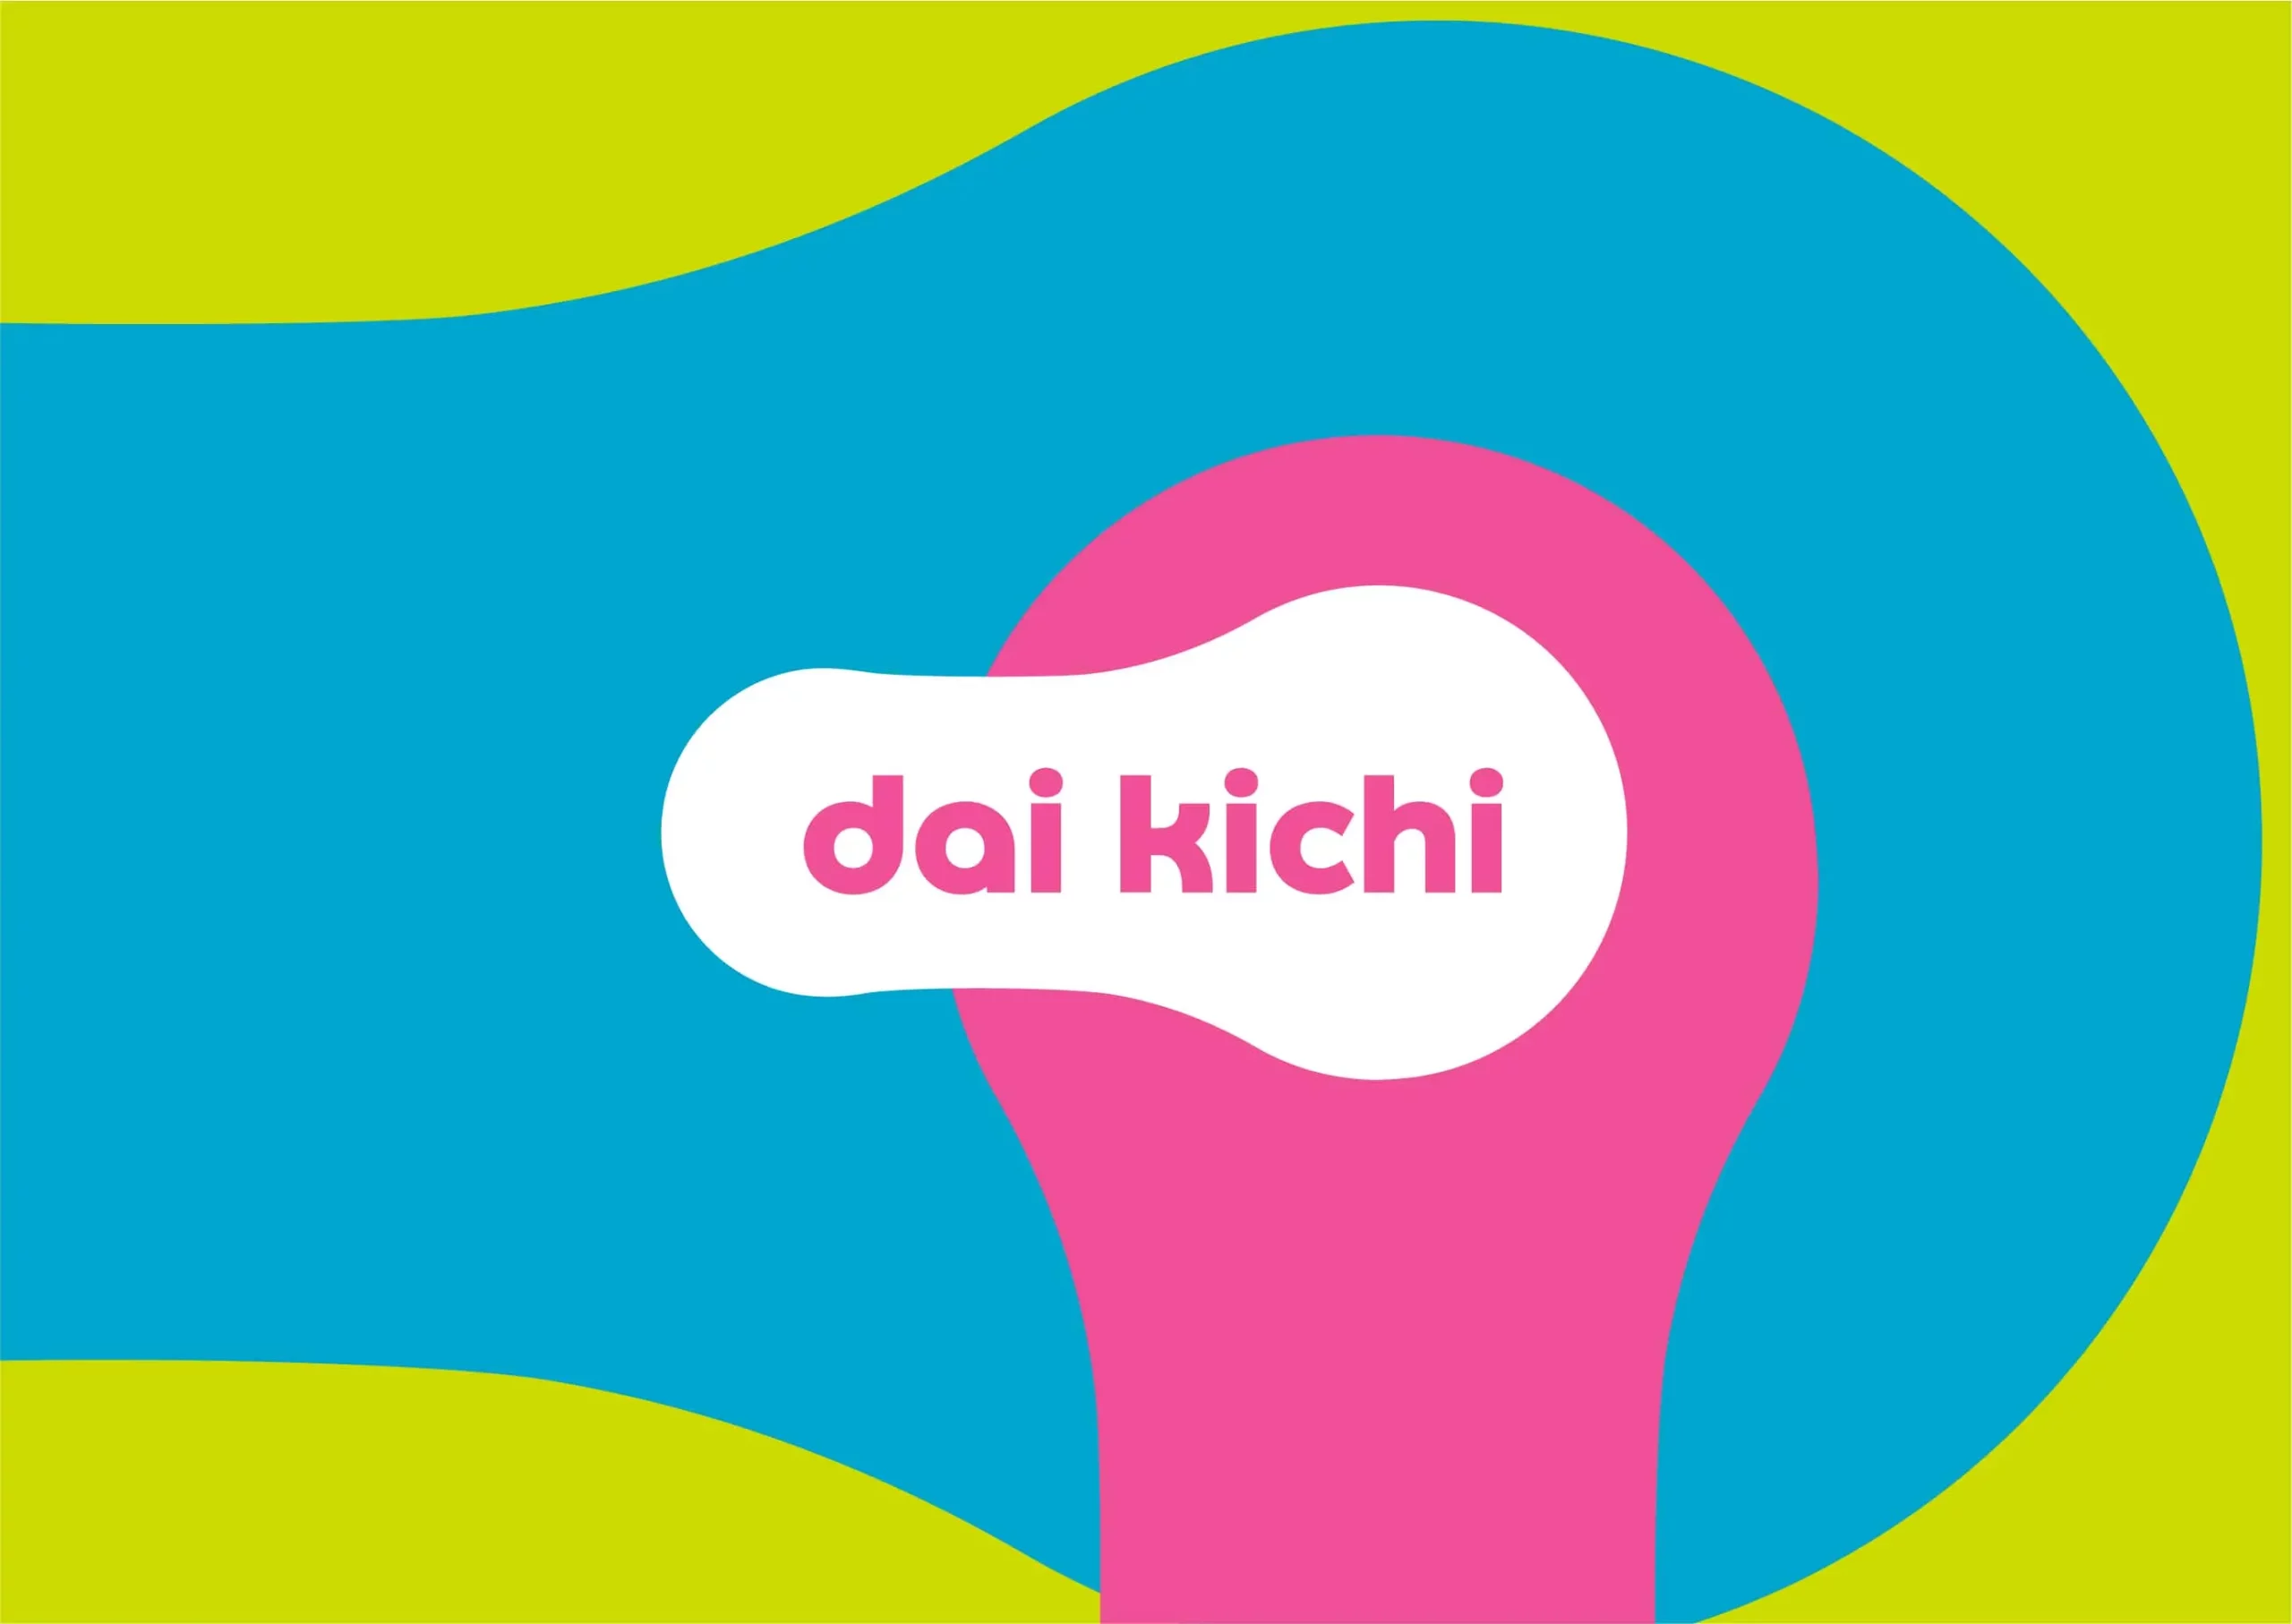 The logo for dai kichi.